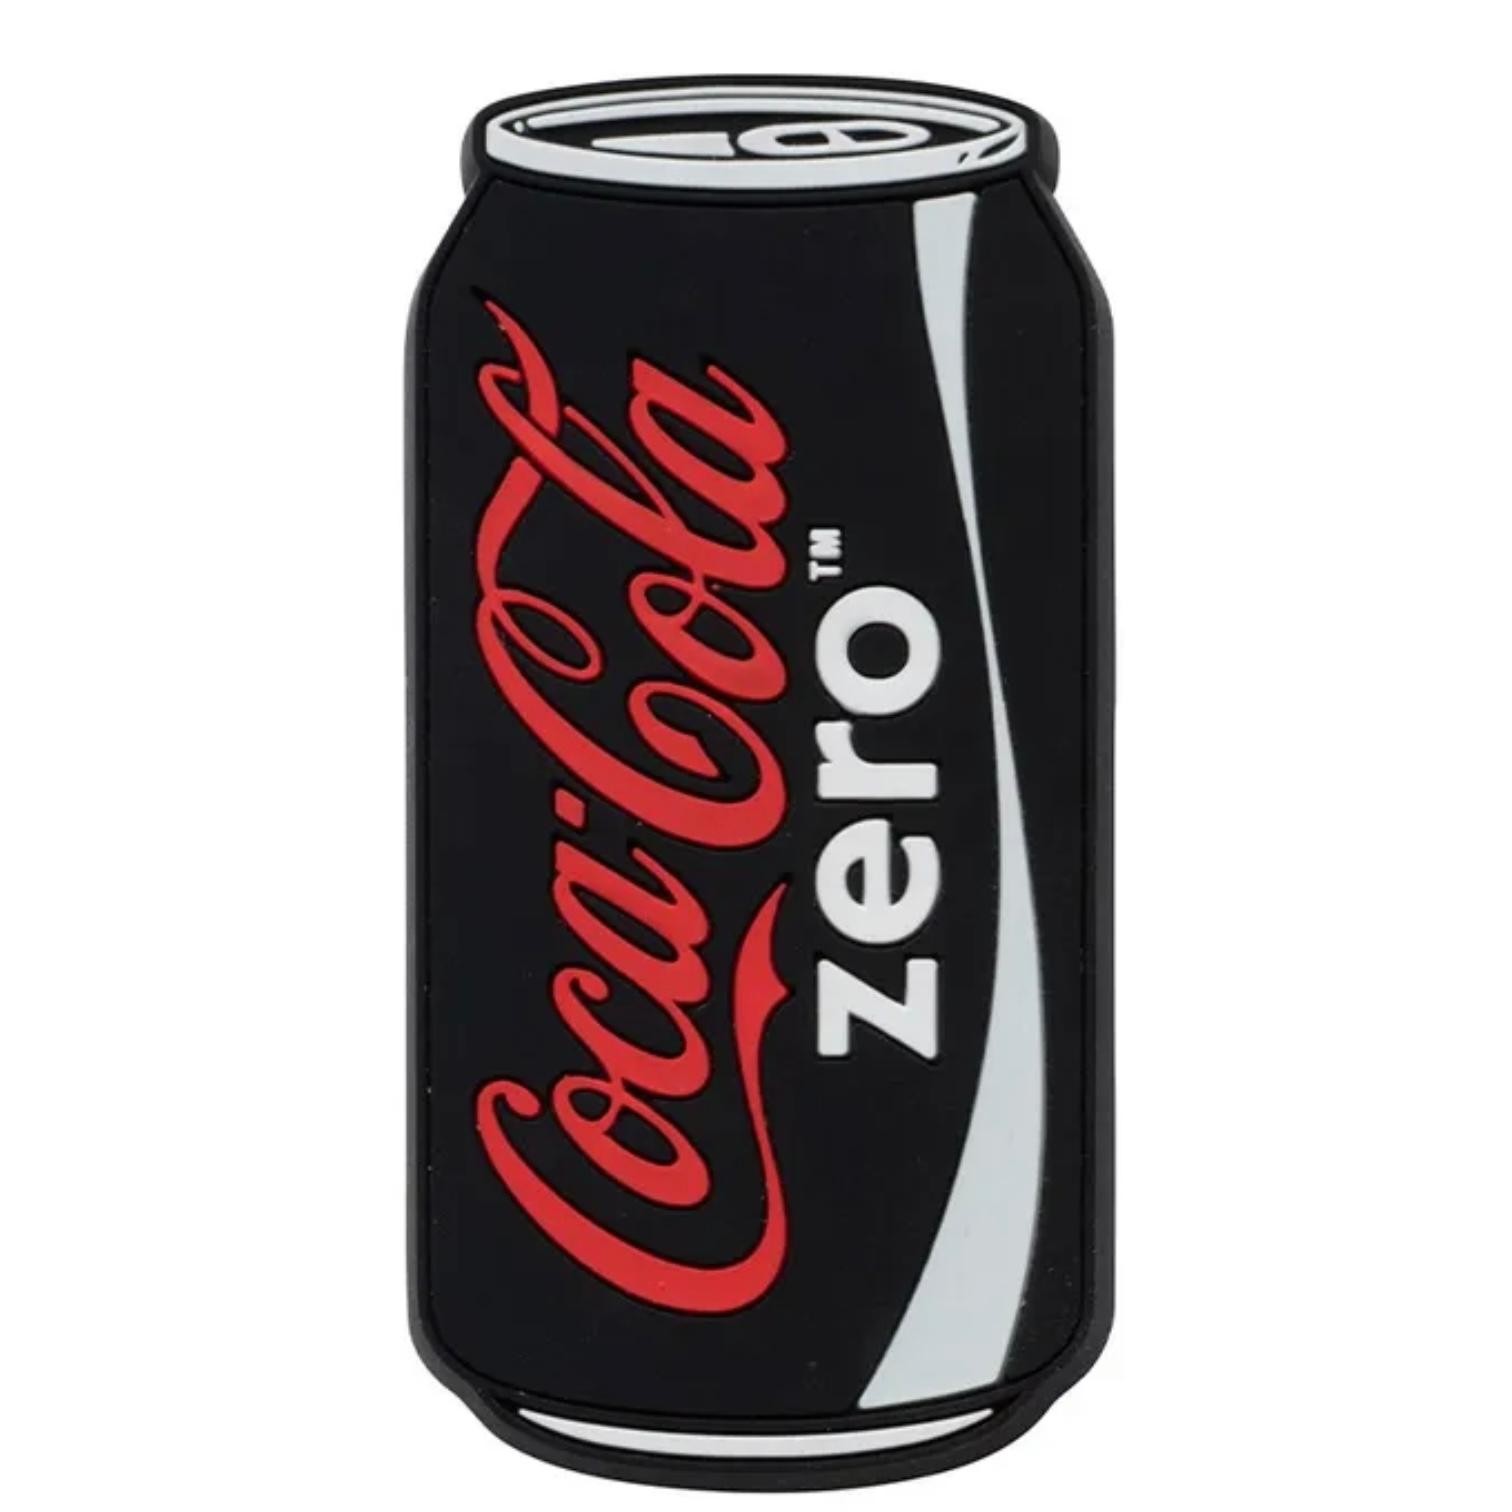 Coke zero can